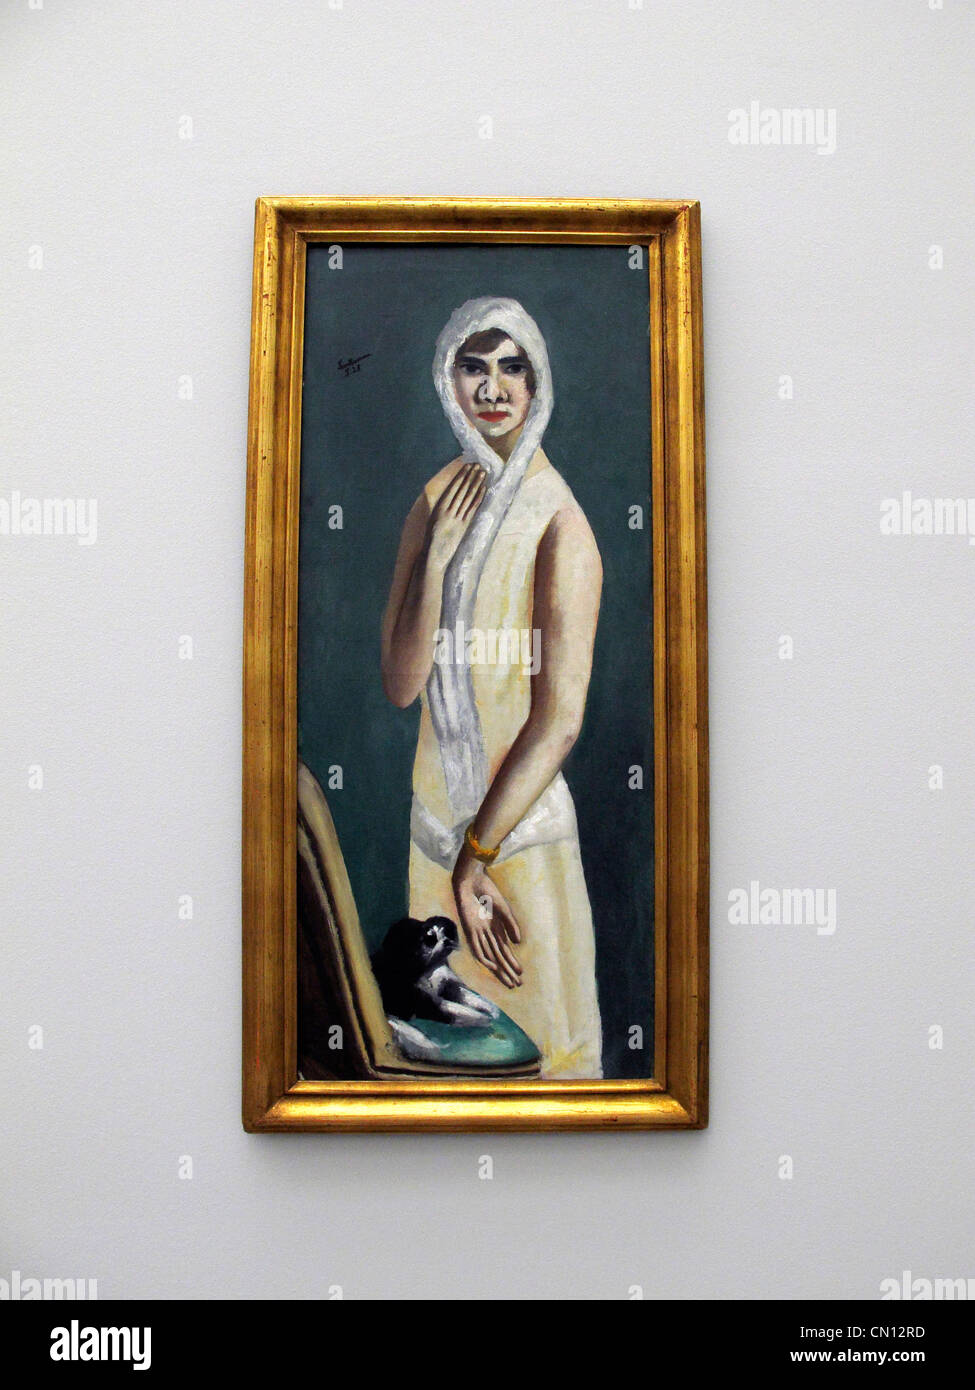 Allemagne Munich Pinakothek der Moderne "Les femmes" Picasso Beckmann De Kooning 2012 mars. Portrait de Max Beckmann Quappi 1925 Banque D'Images